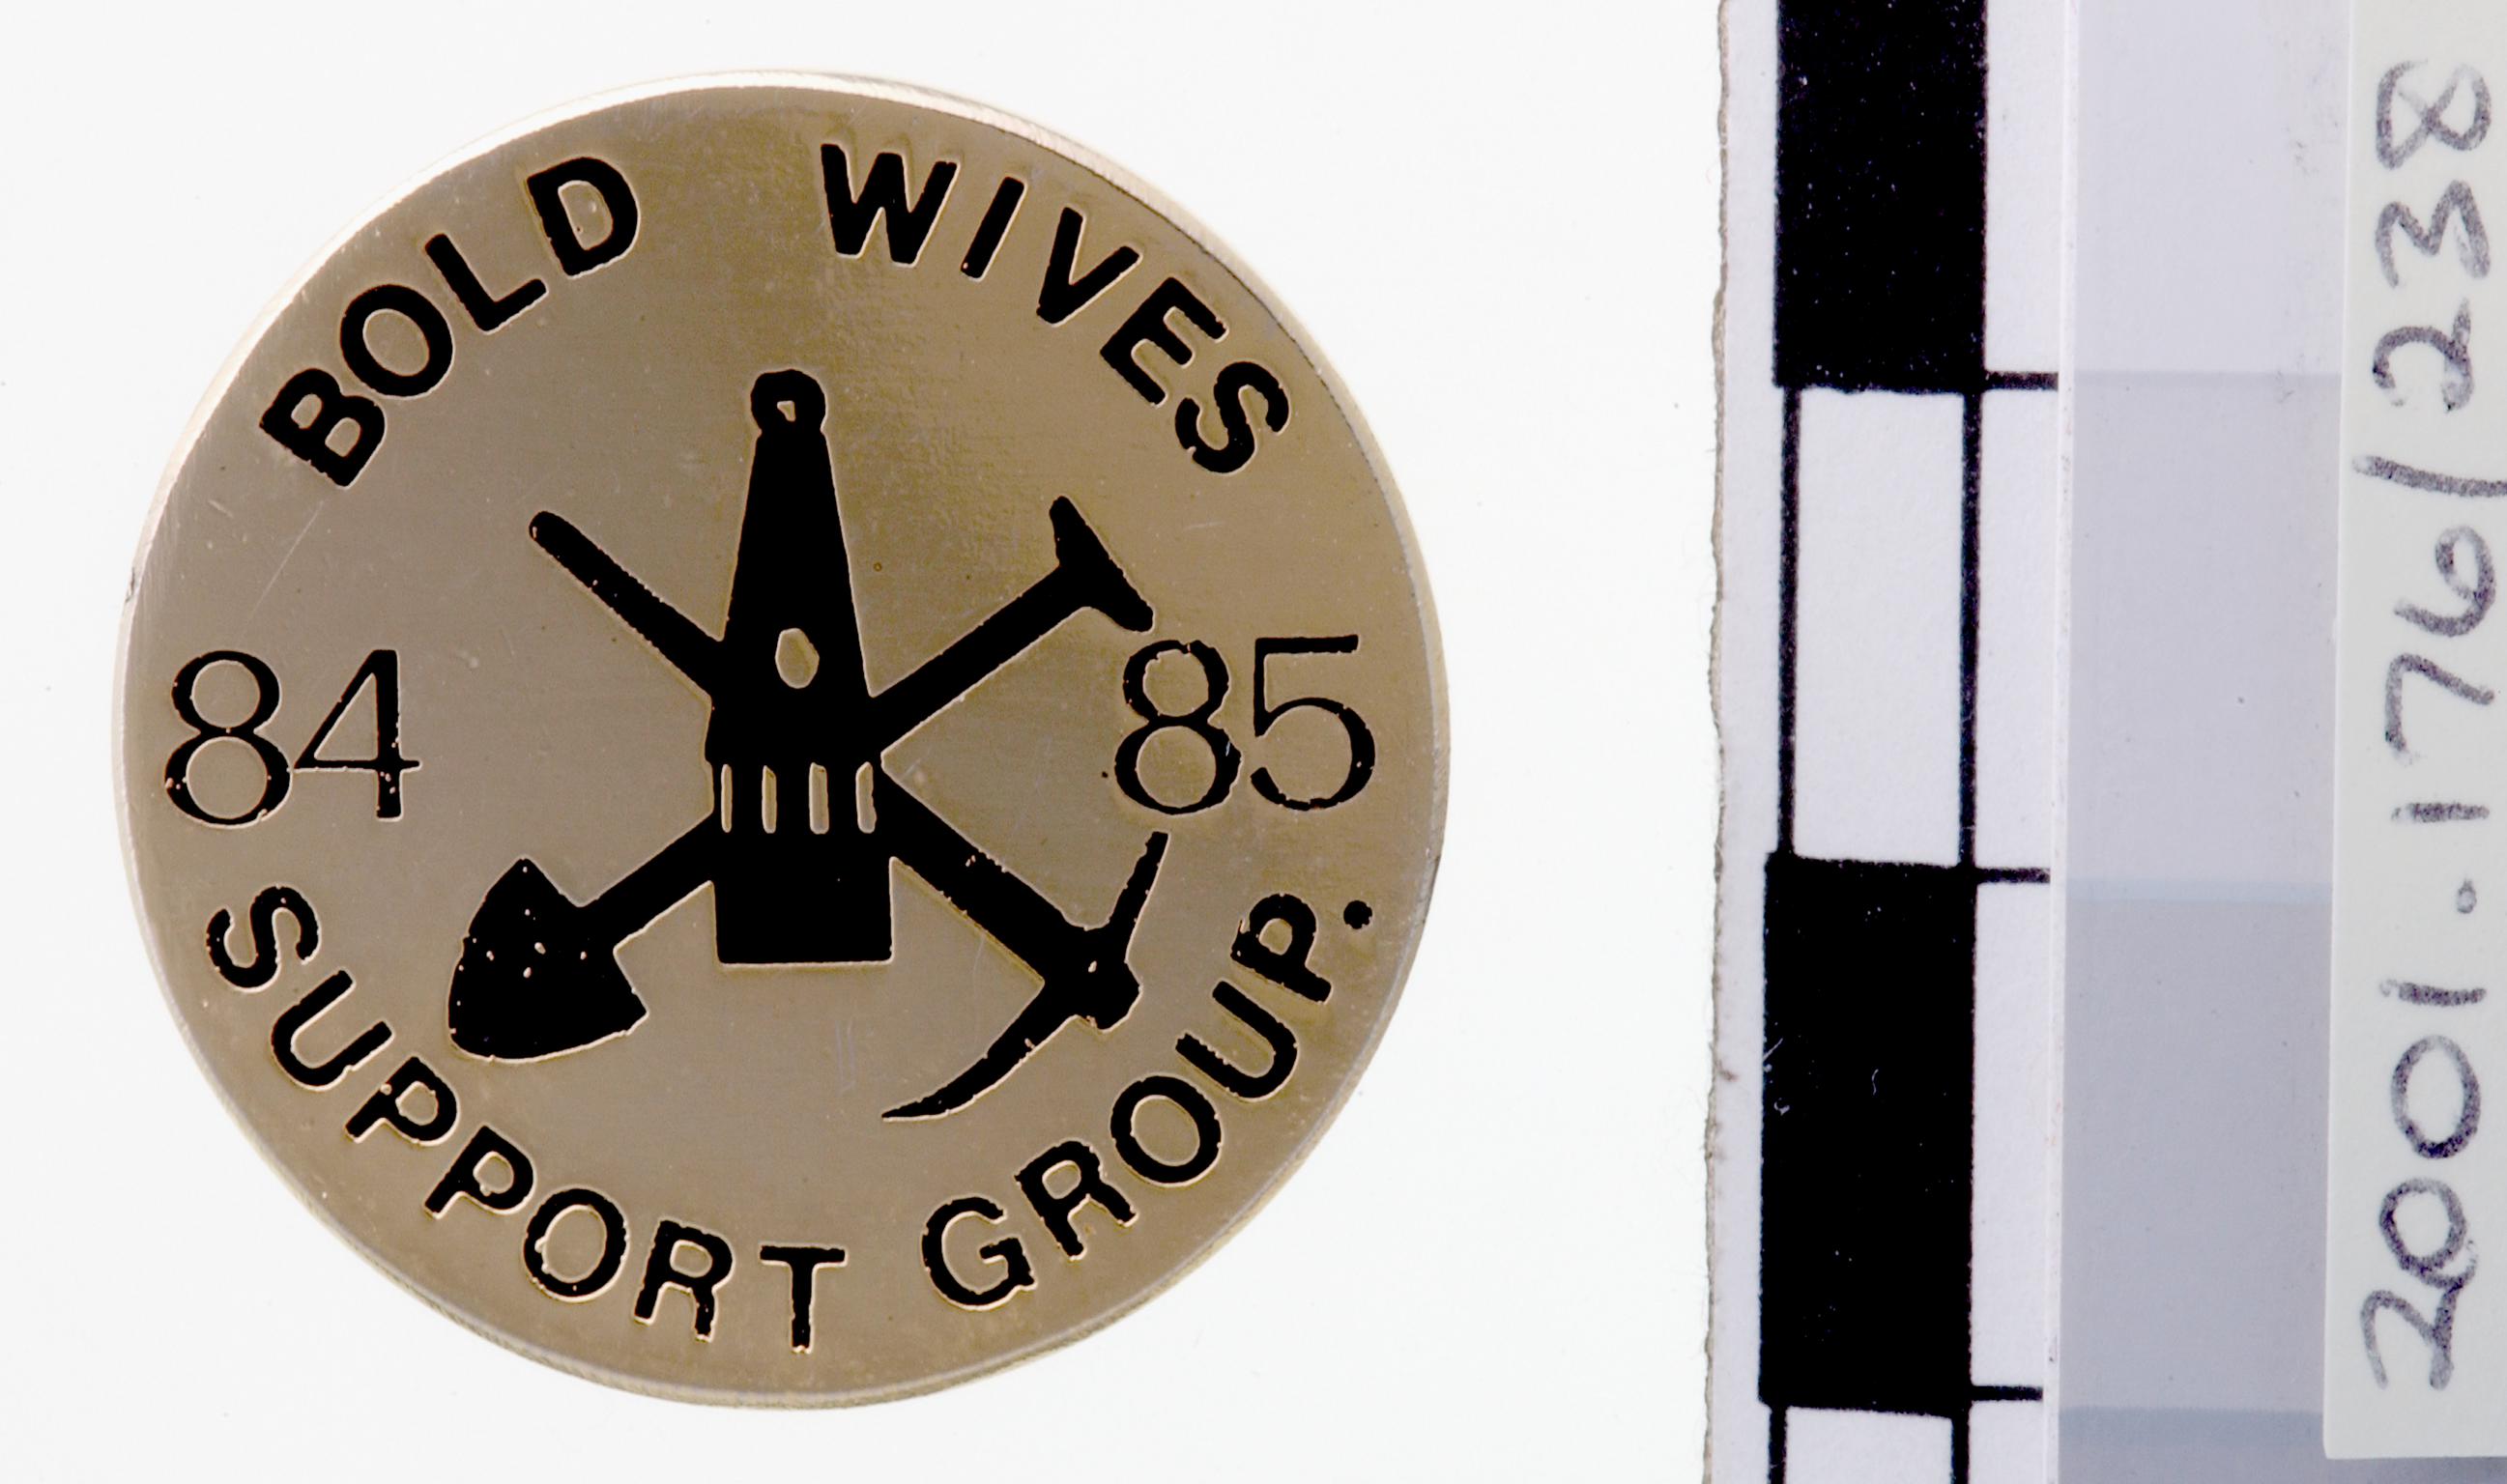 N.U.M. womens group, badge